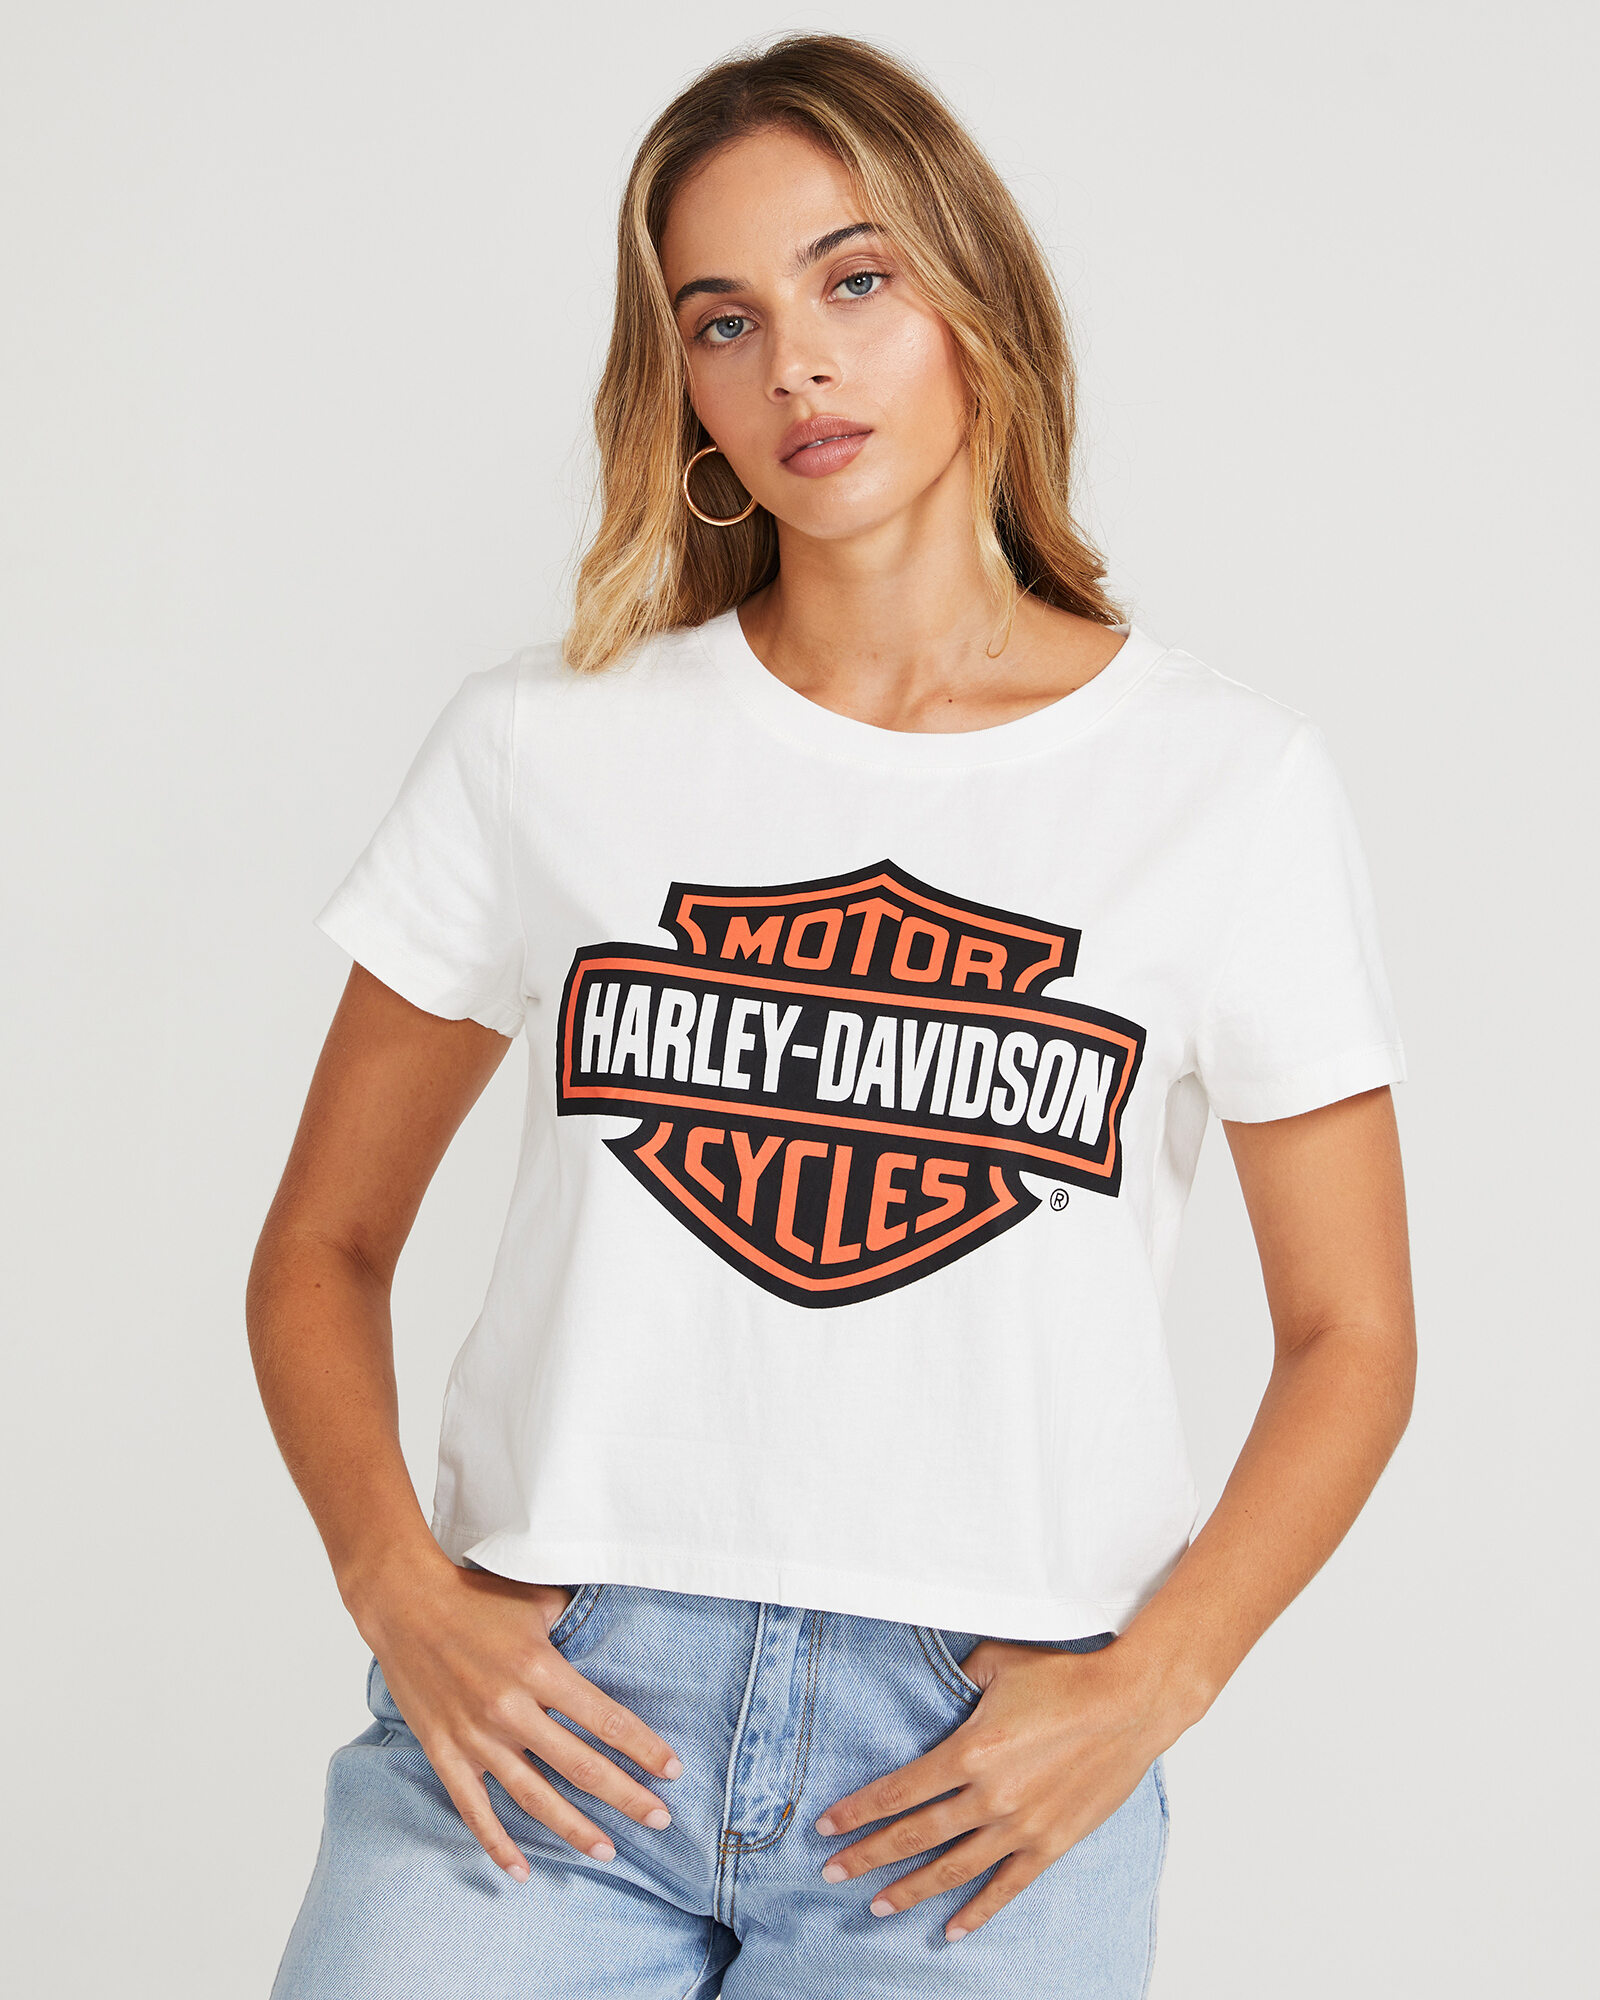 Buy Harley Davidson Jumper Womens Cheap Online